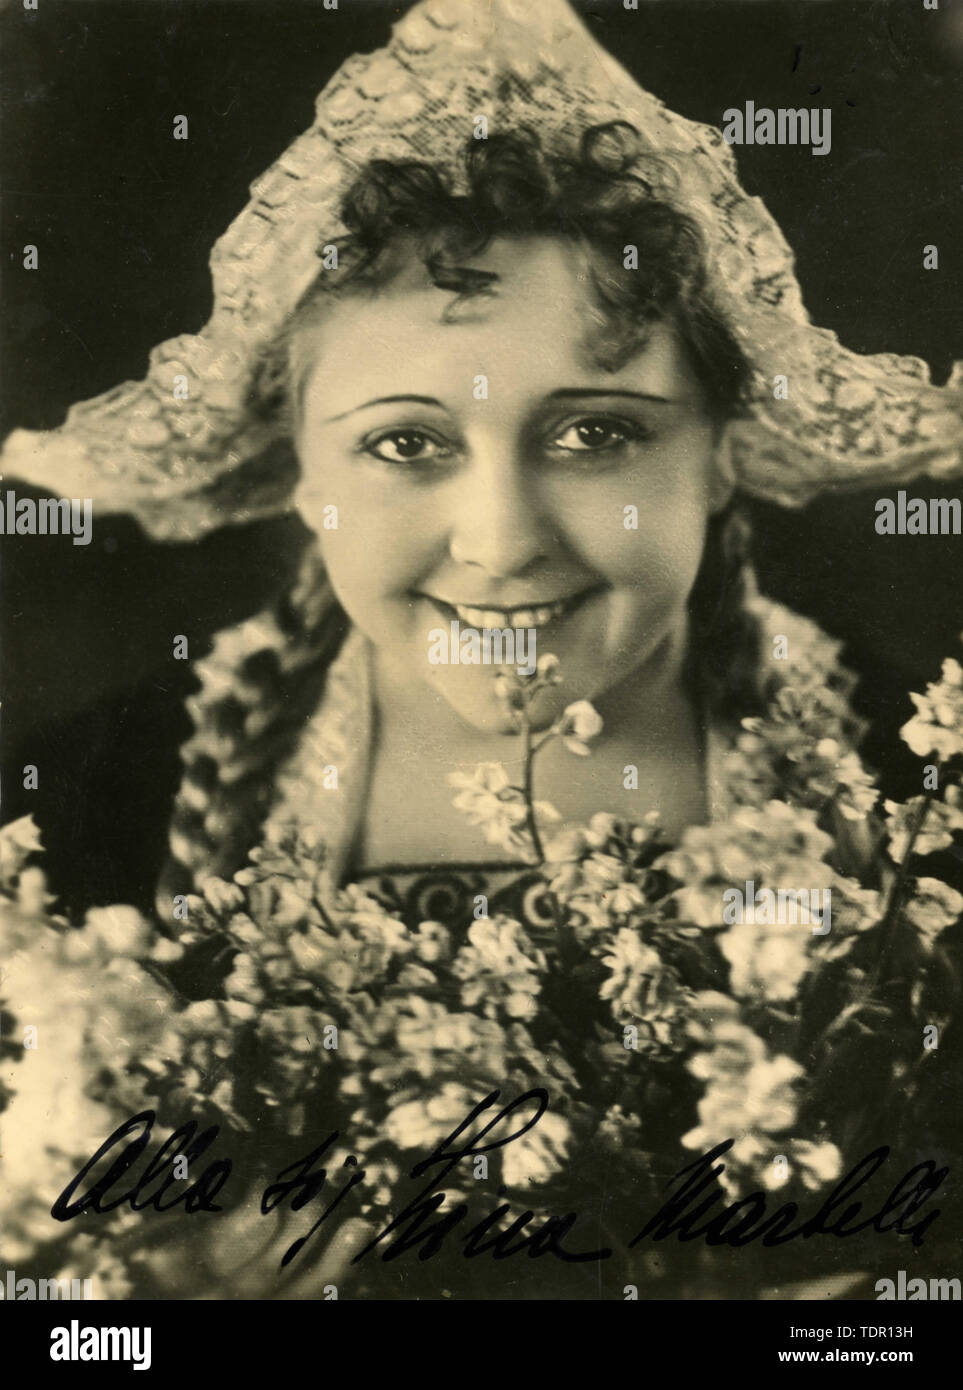 Italian soprano Toti Dal Monte, 1940s Stock Photo - Alamy